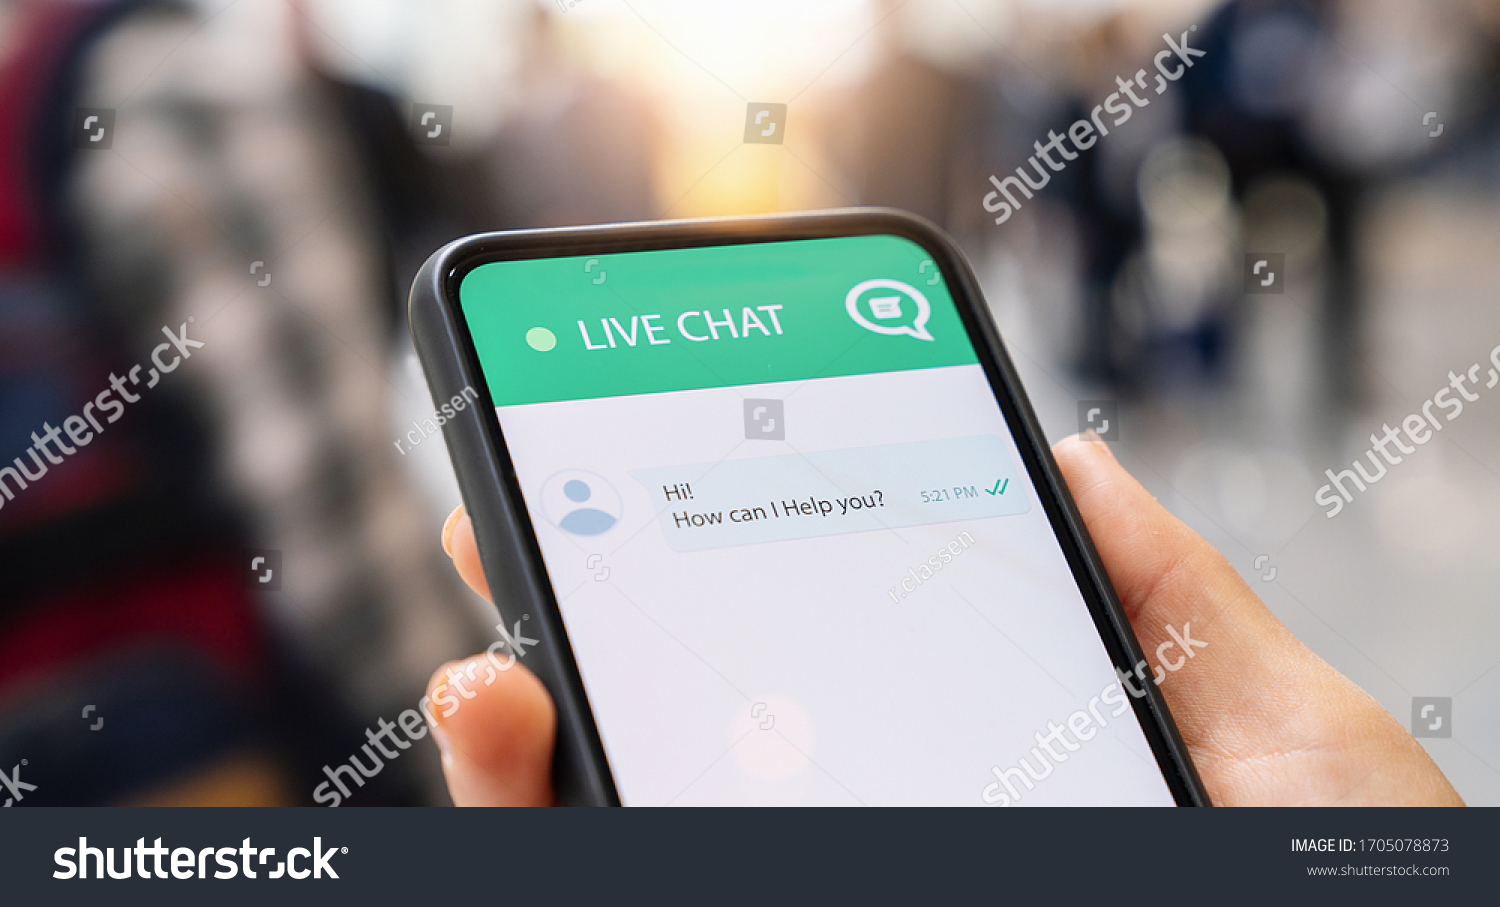 Asus zenfone 5 live chat